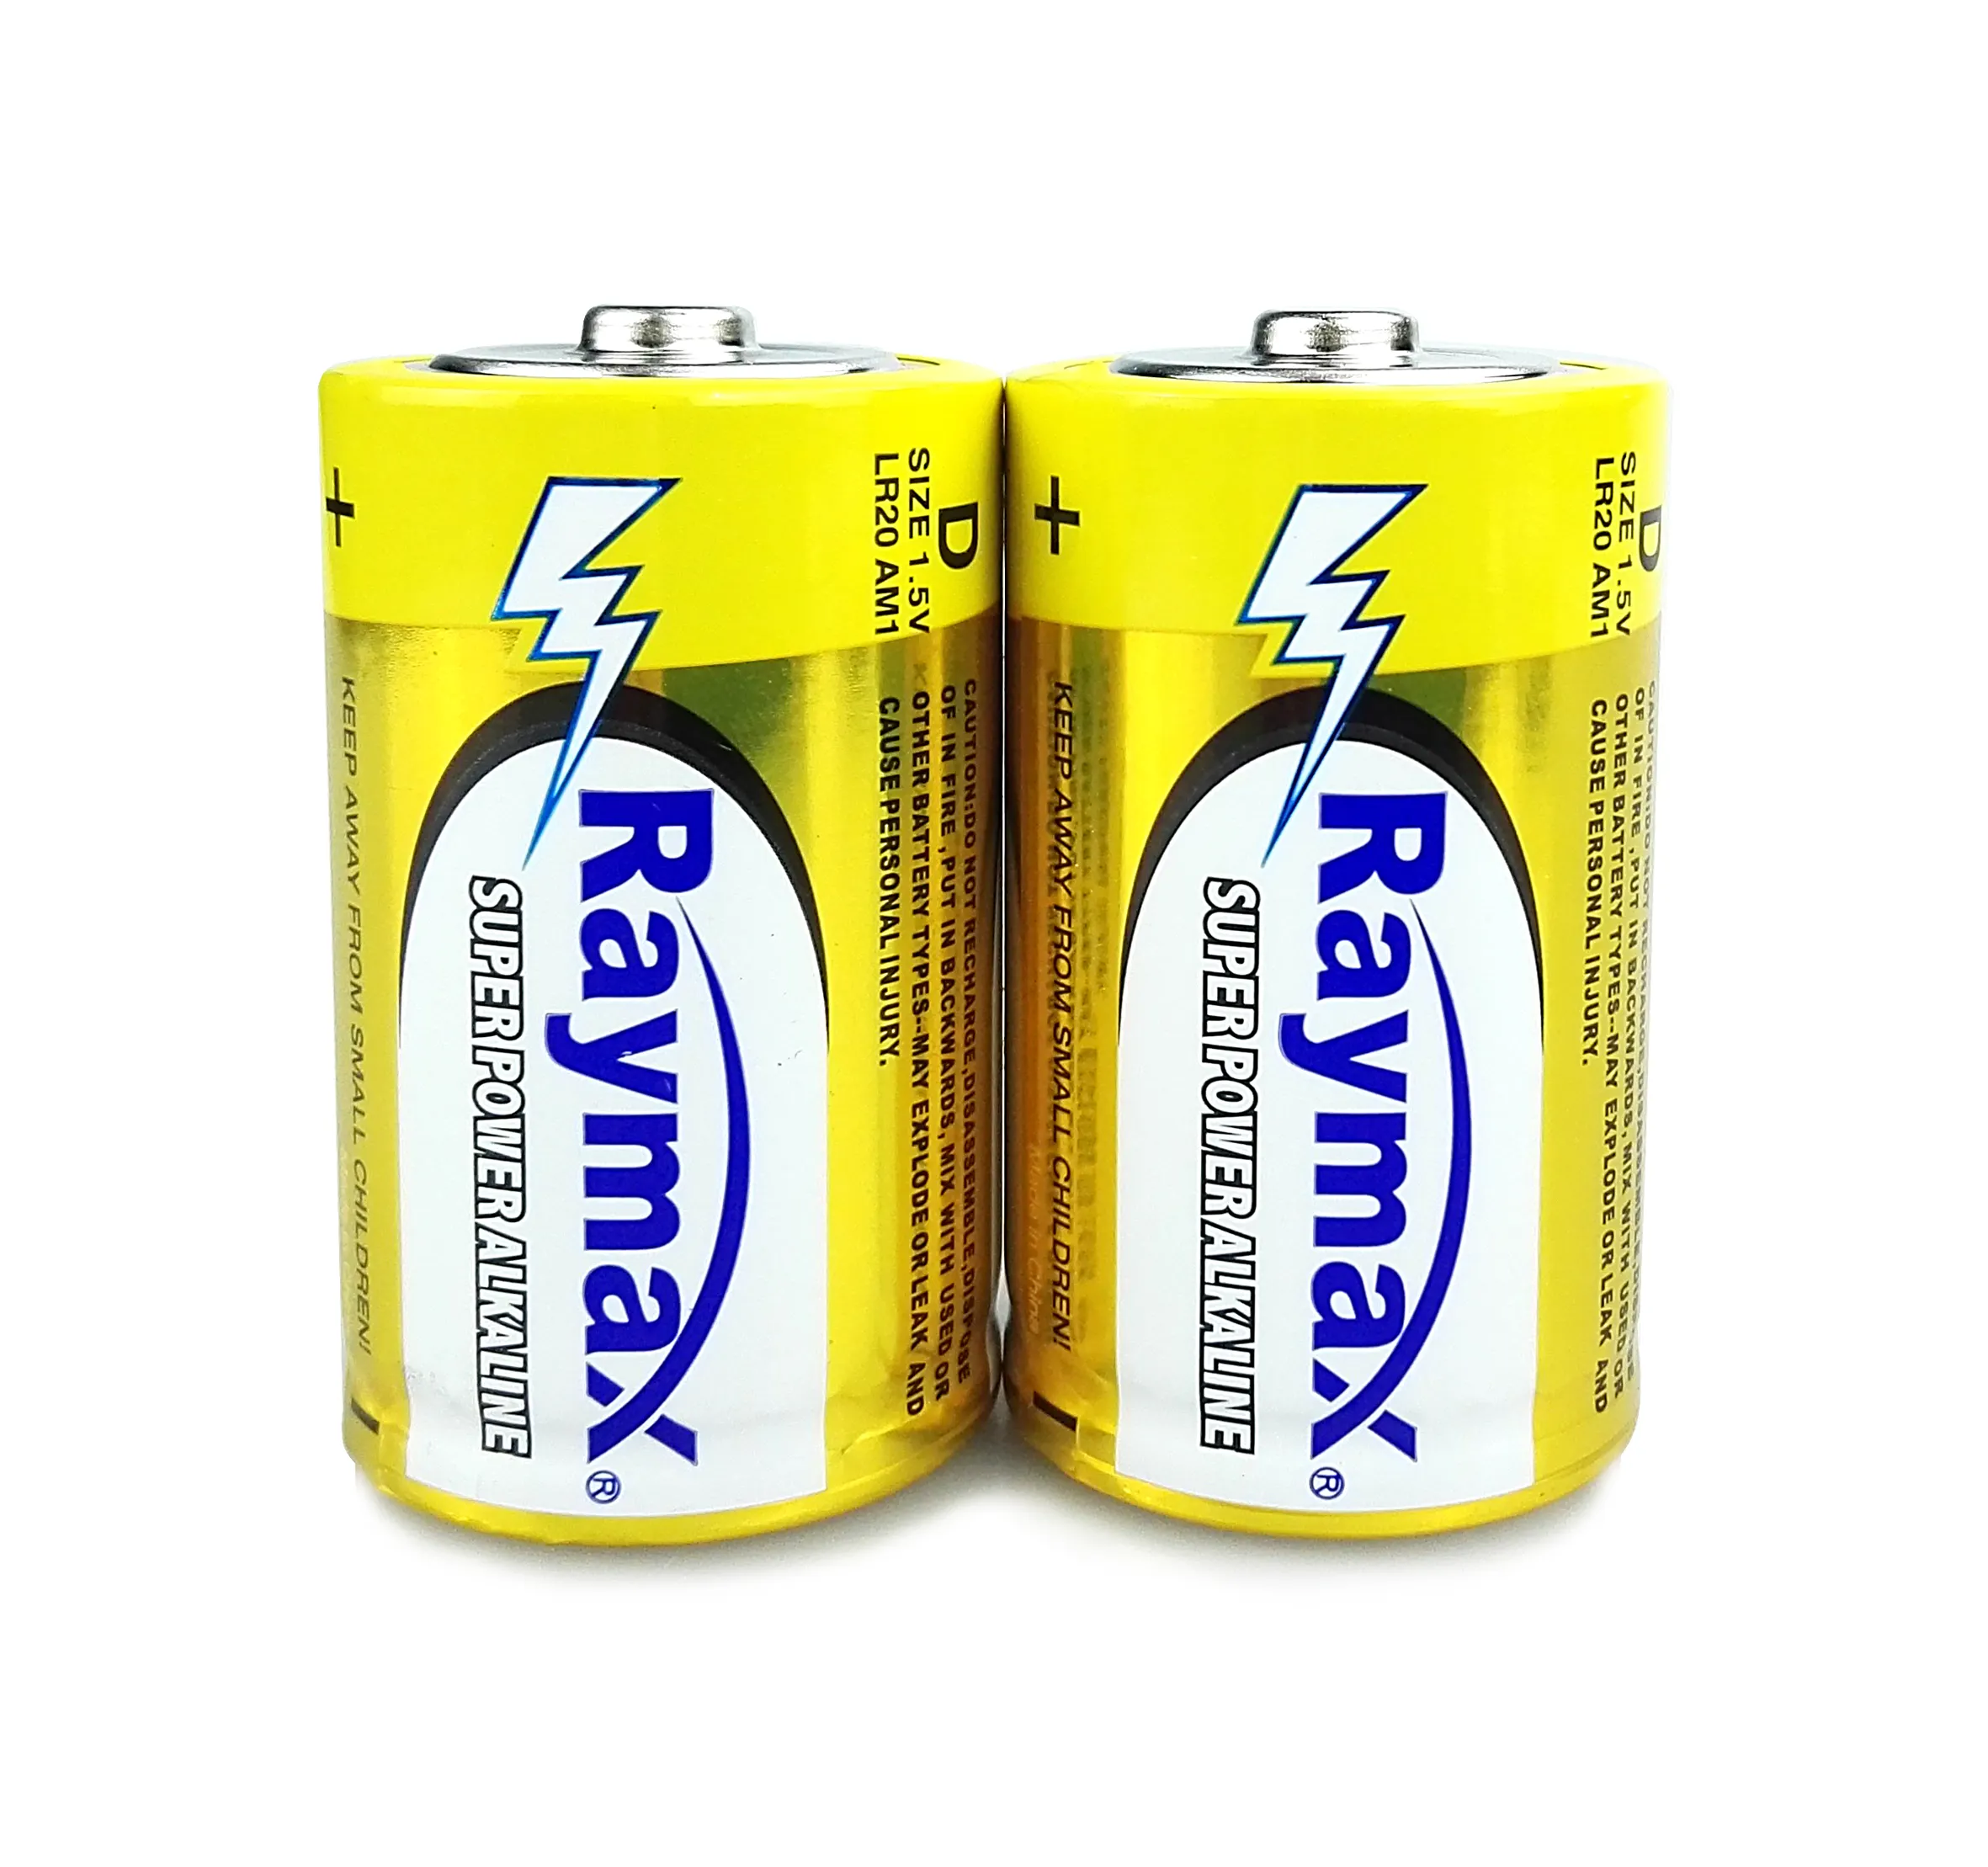 Raymax Aangepaste Batterie Ontwerp Fabriek Aanbod 14000Mah Am1 Lr20 1.5V D Alkaline Batterij